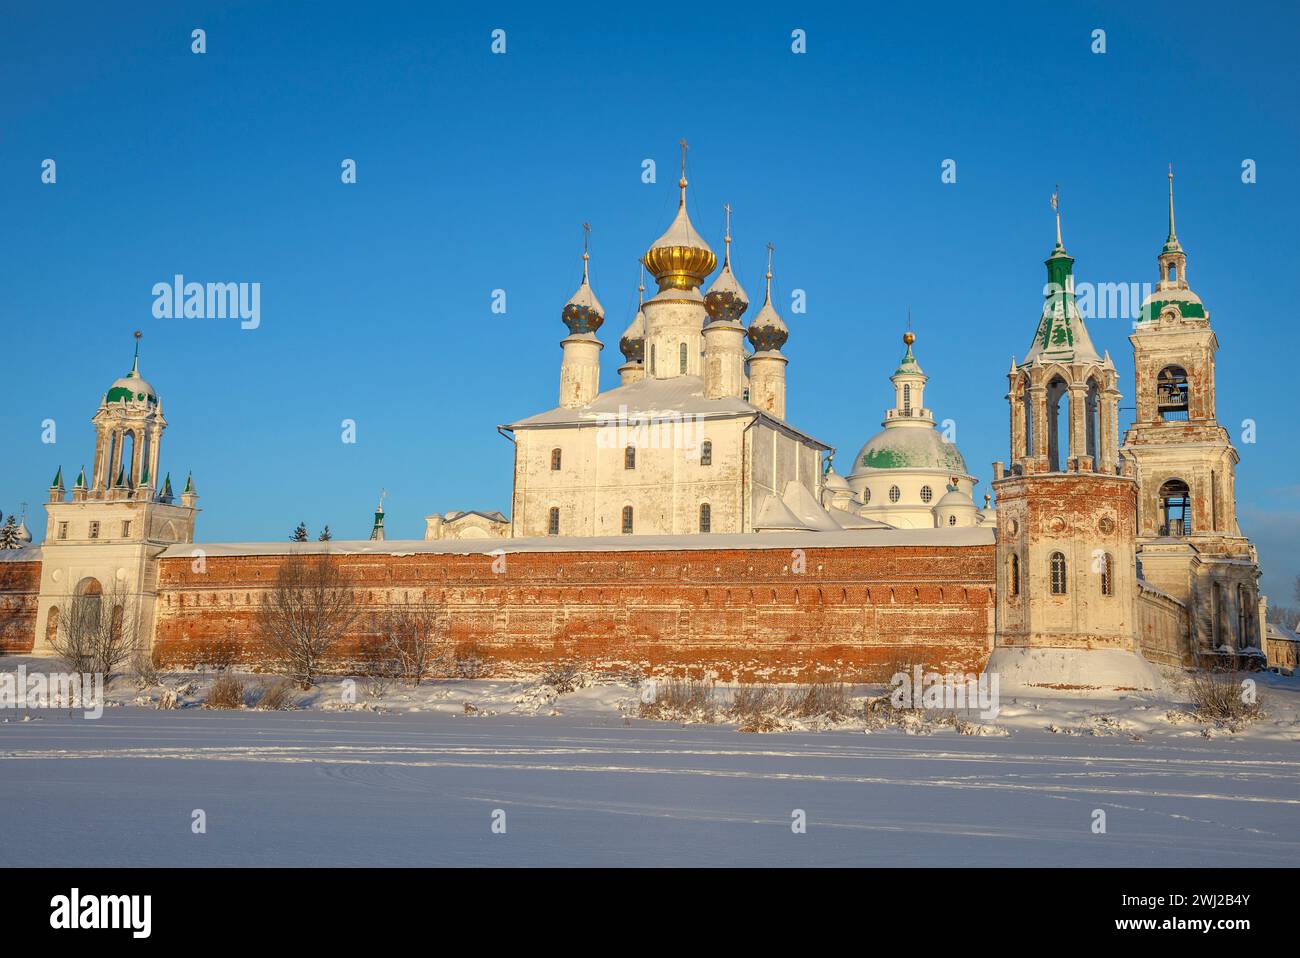 At the walls of the ancient Spaso-Yakovlevsky Dmitriev monastery. Rostov Veliky, Russia Stock Photo